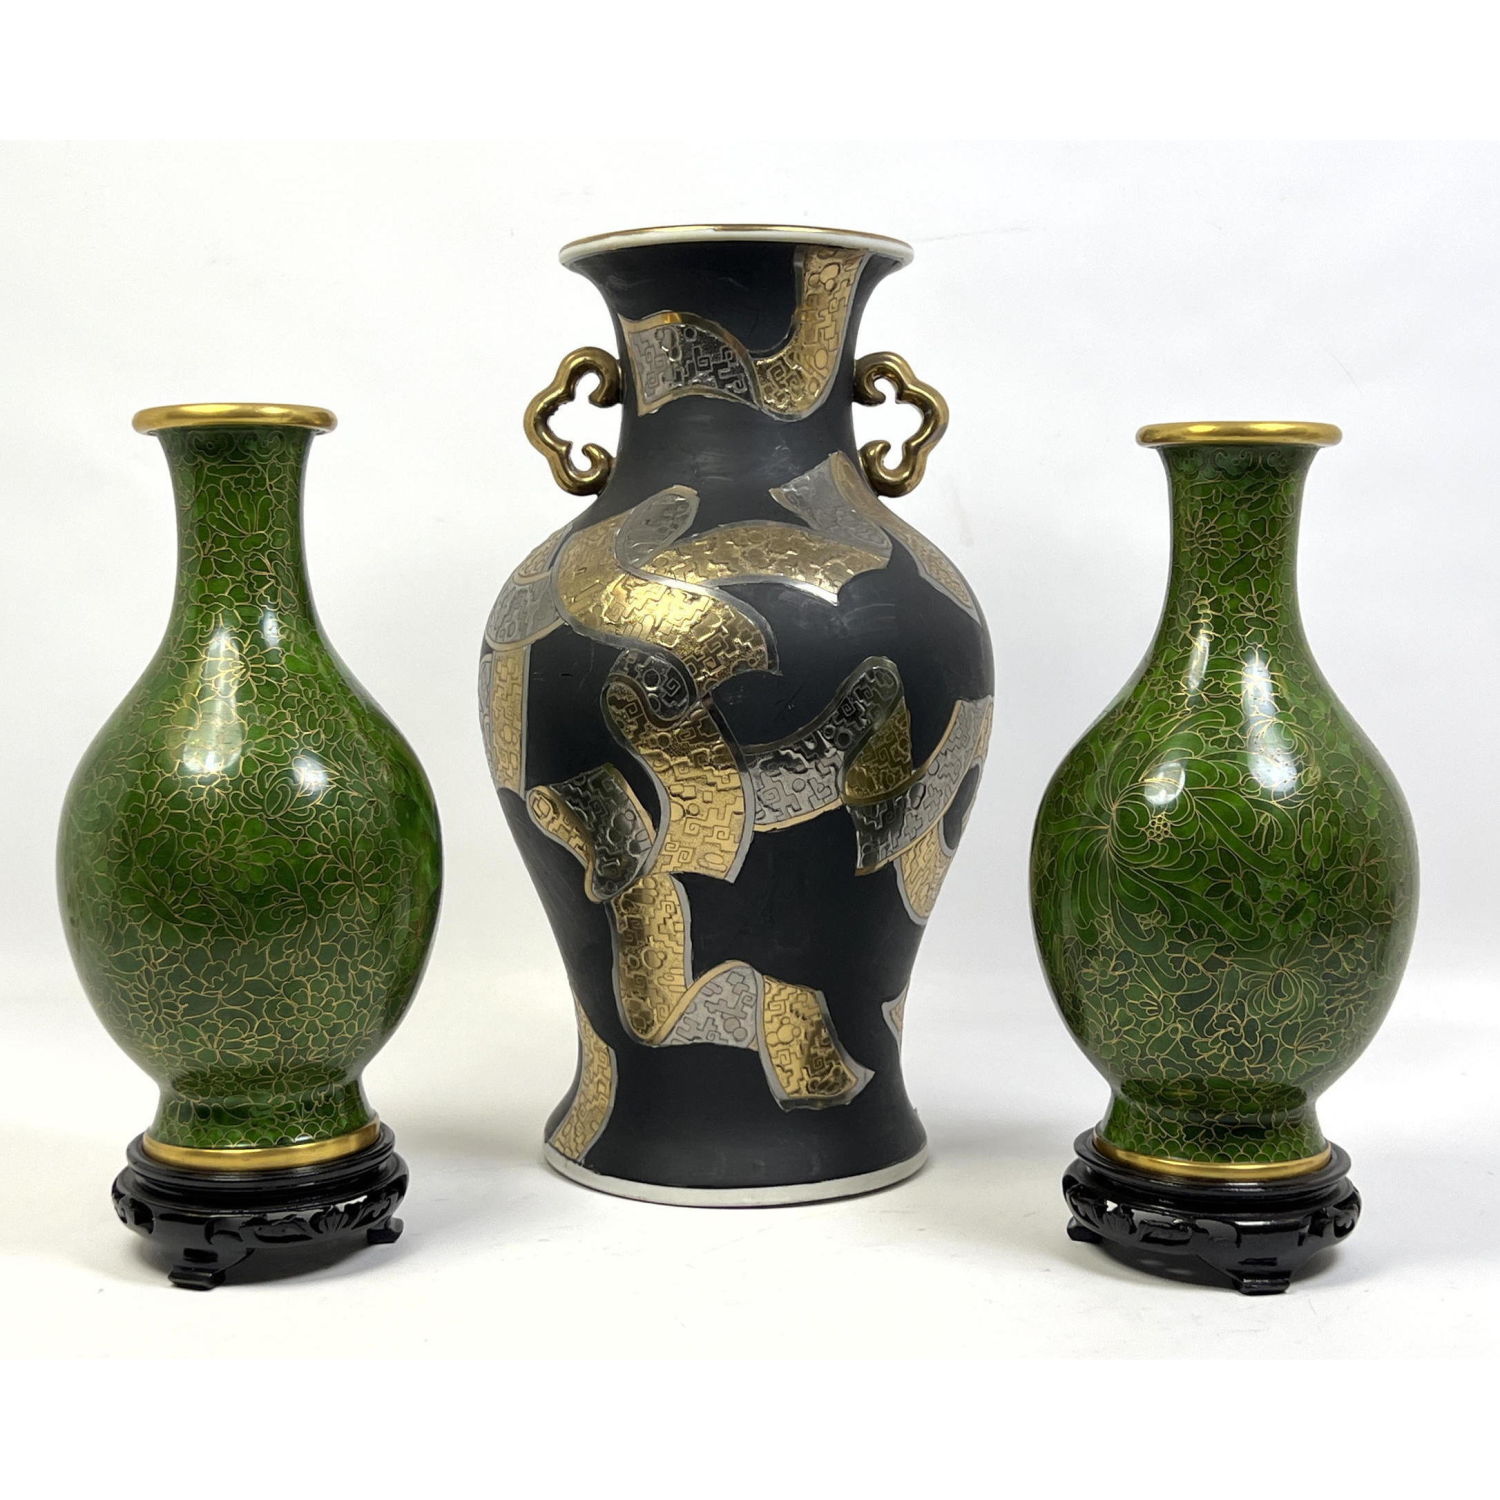 3pc Asian Vases Pr of Chinese 2b917c